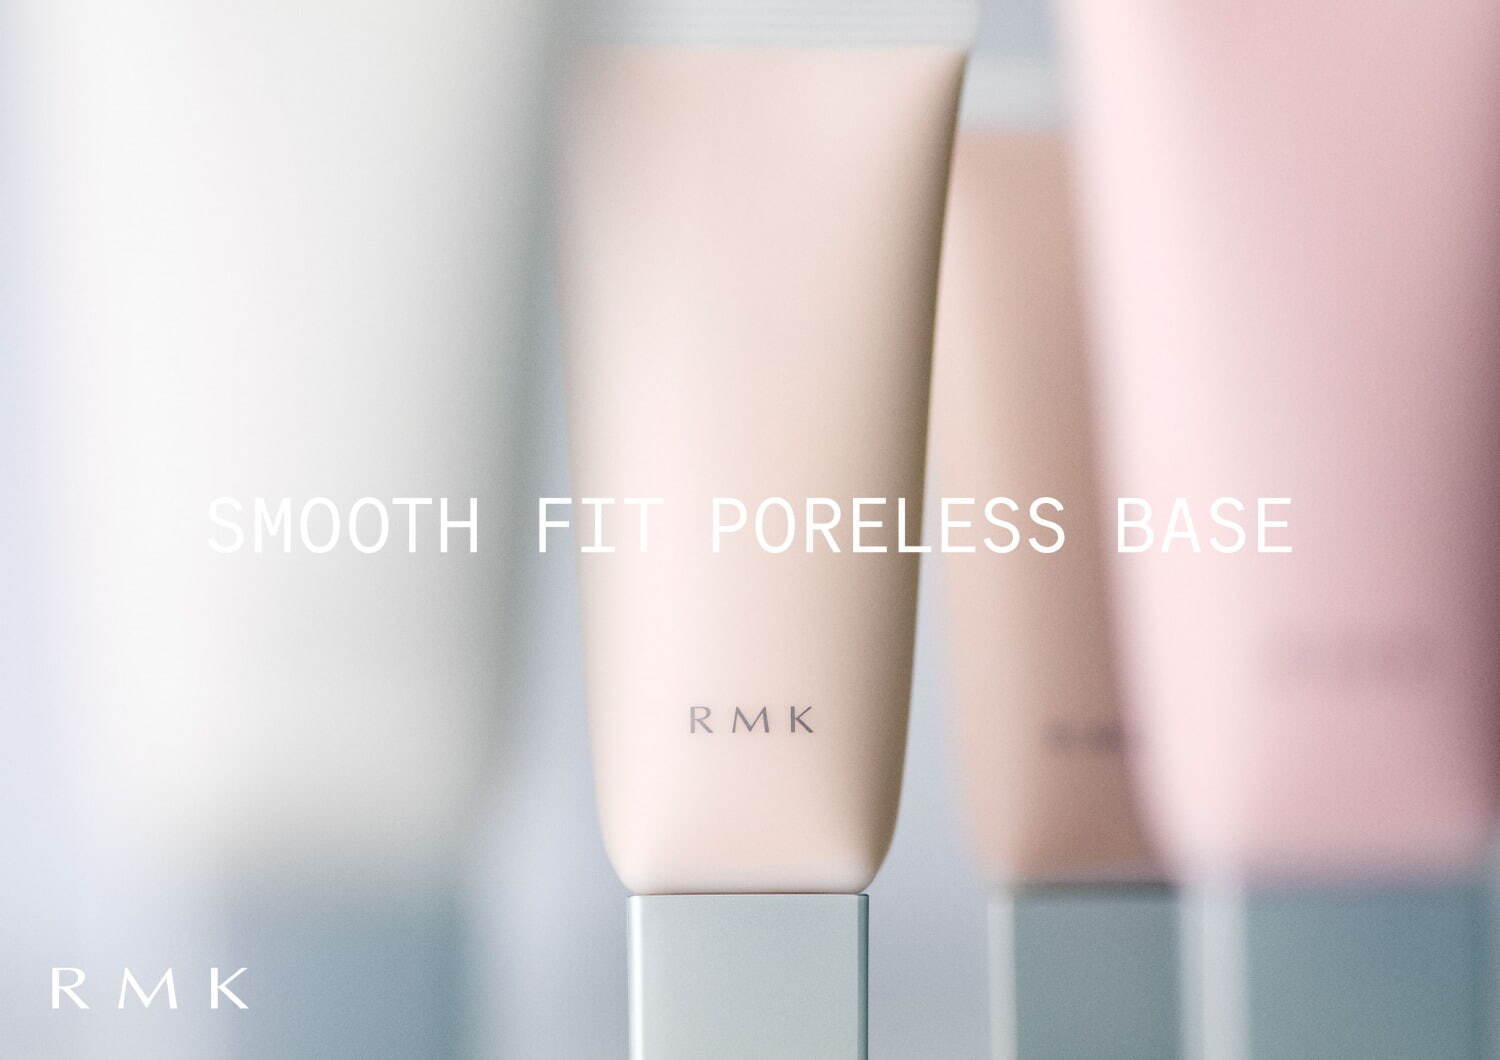 RMK Smooth Fit Poreless Base 全4色 各35g 各4,180日元